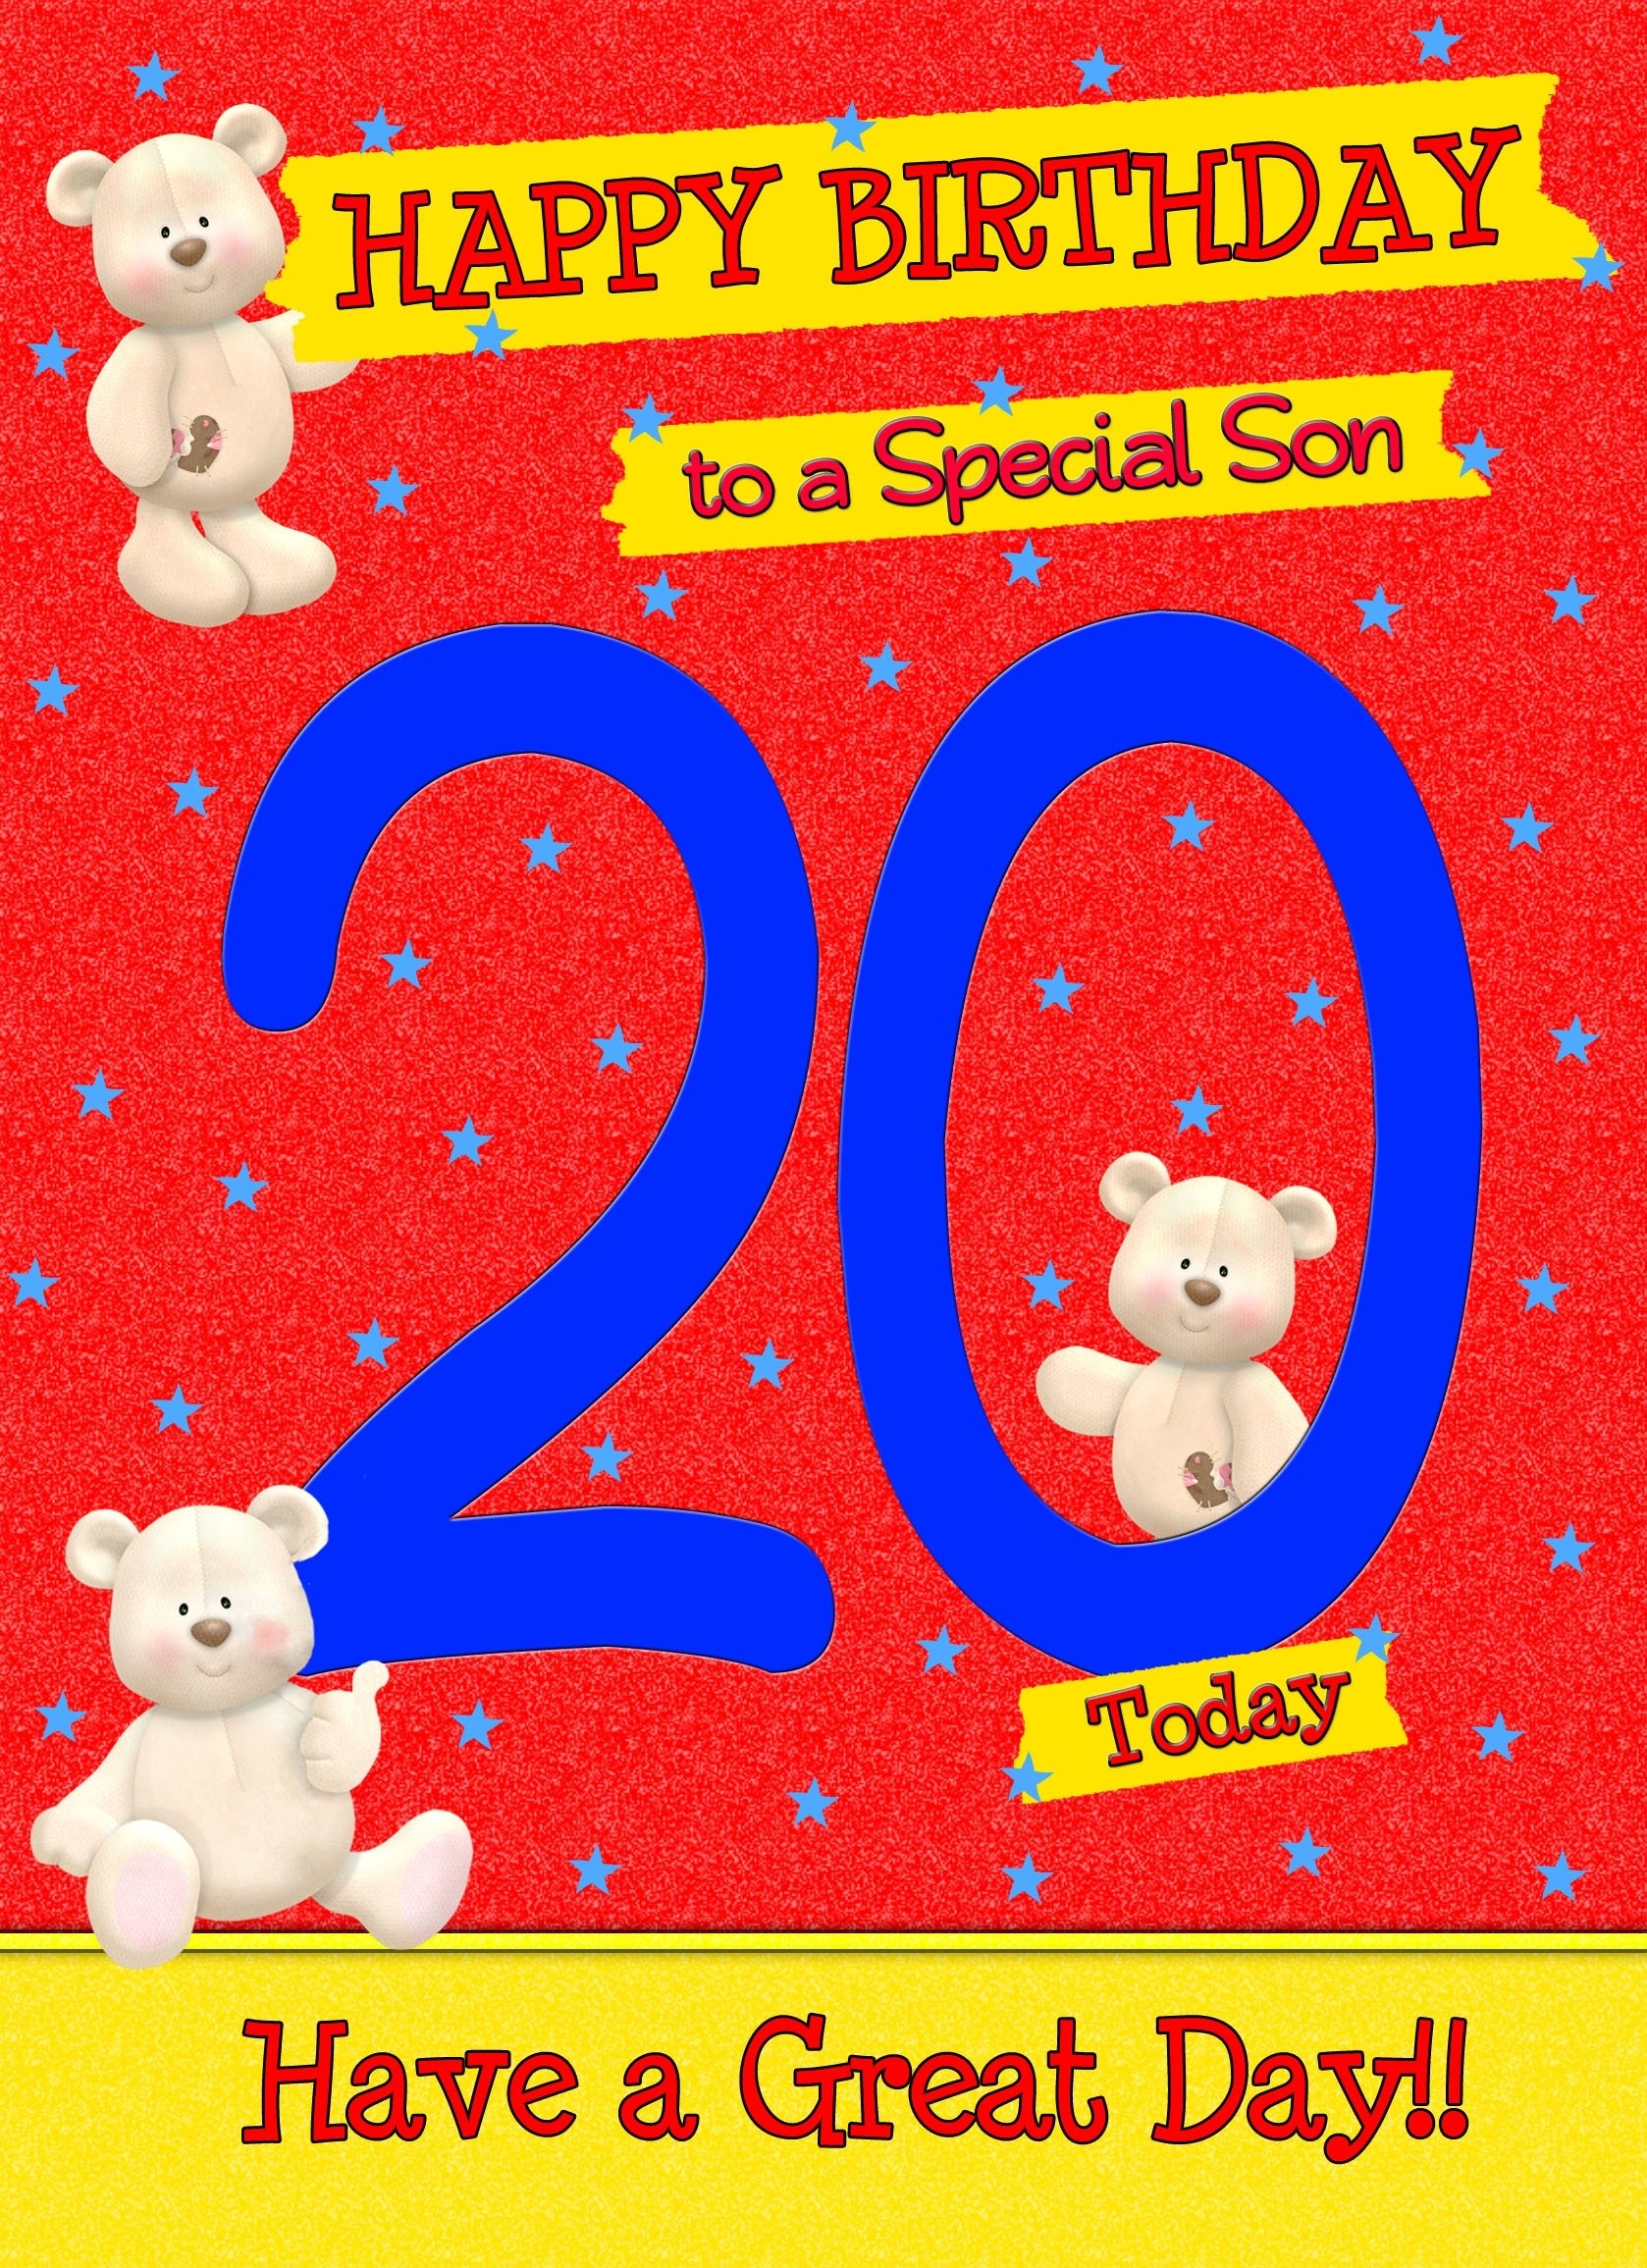 20 Today Birthday Card (Son)